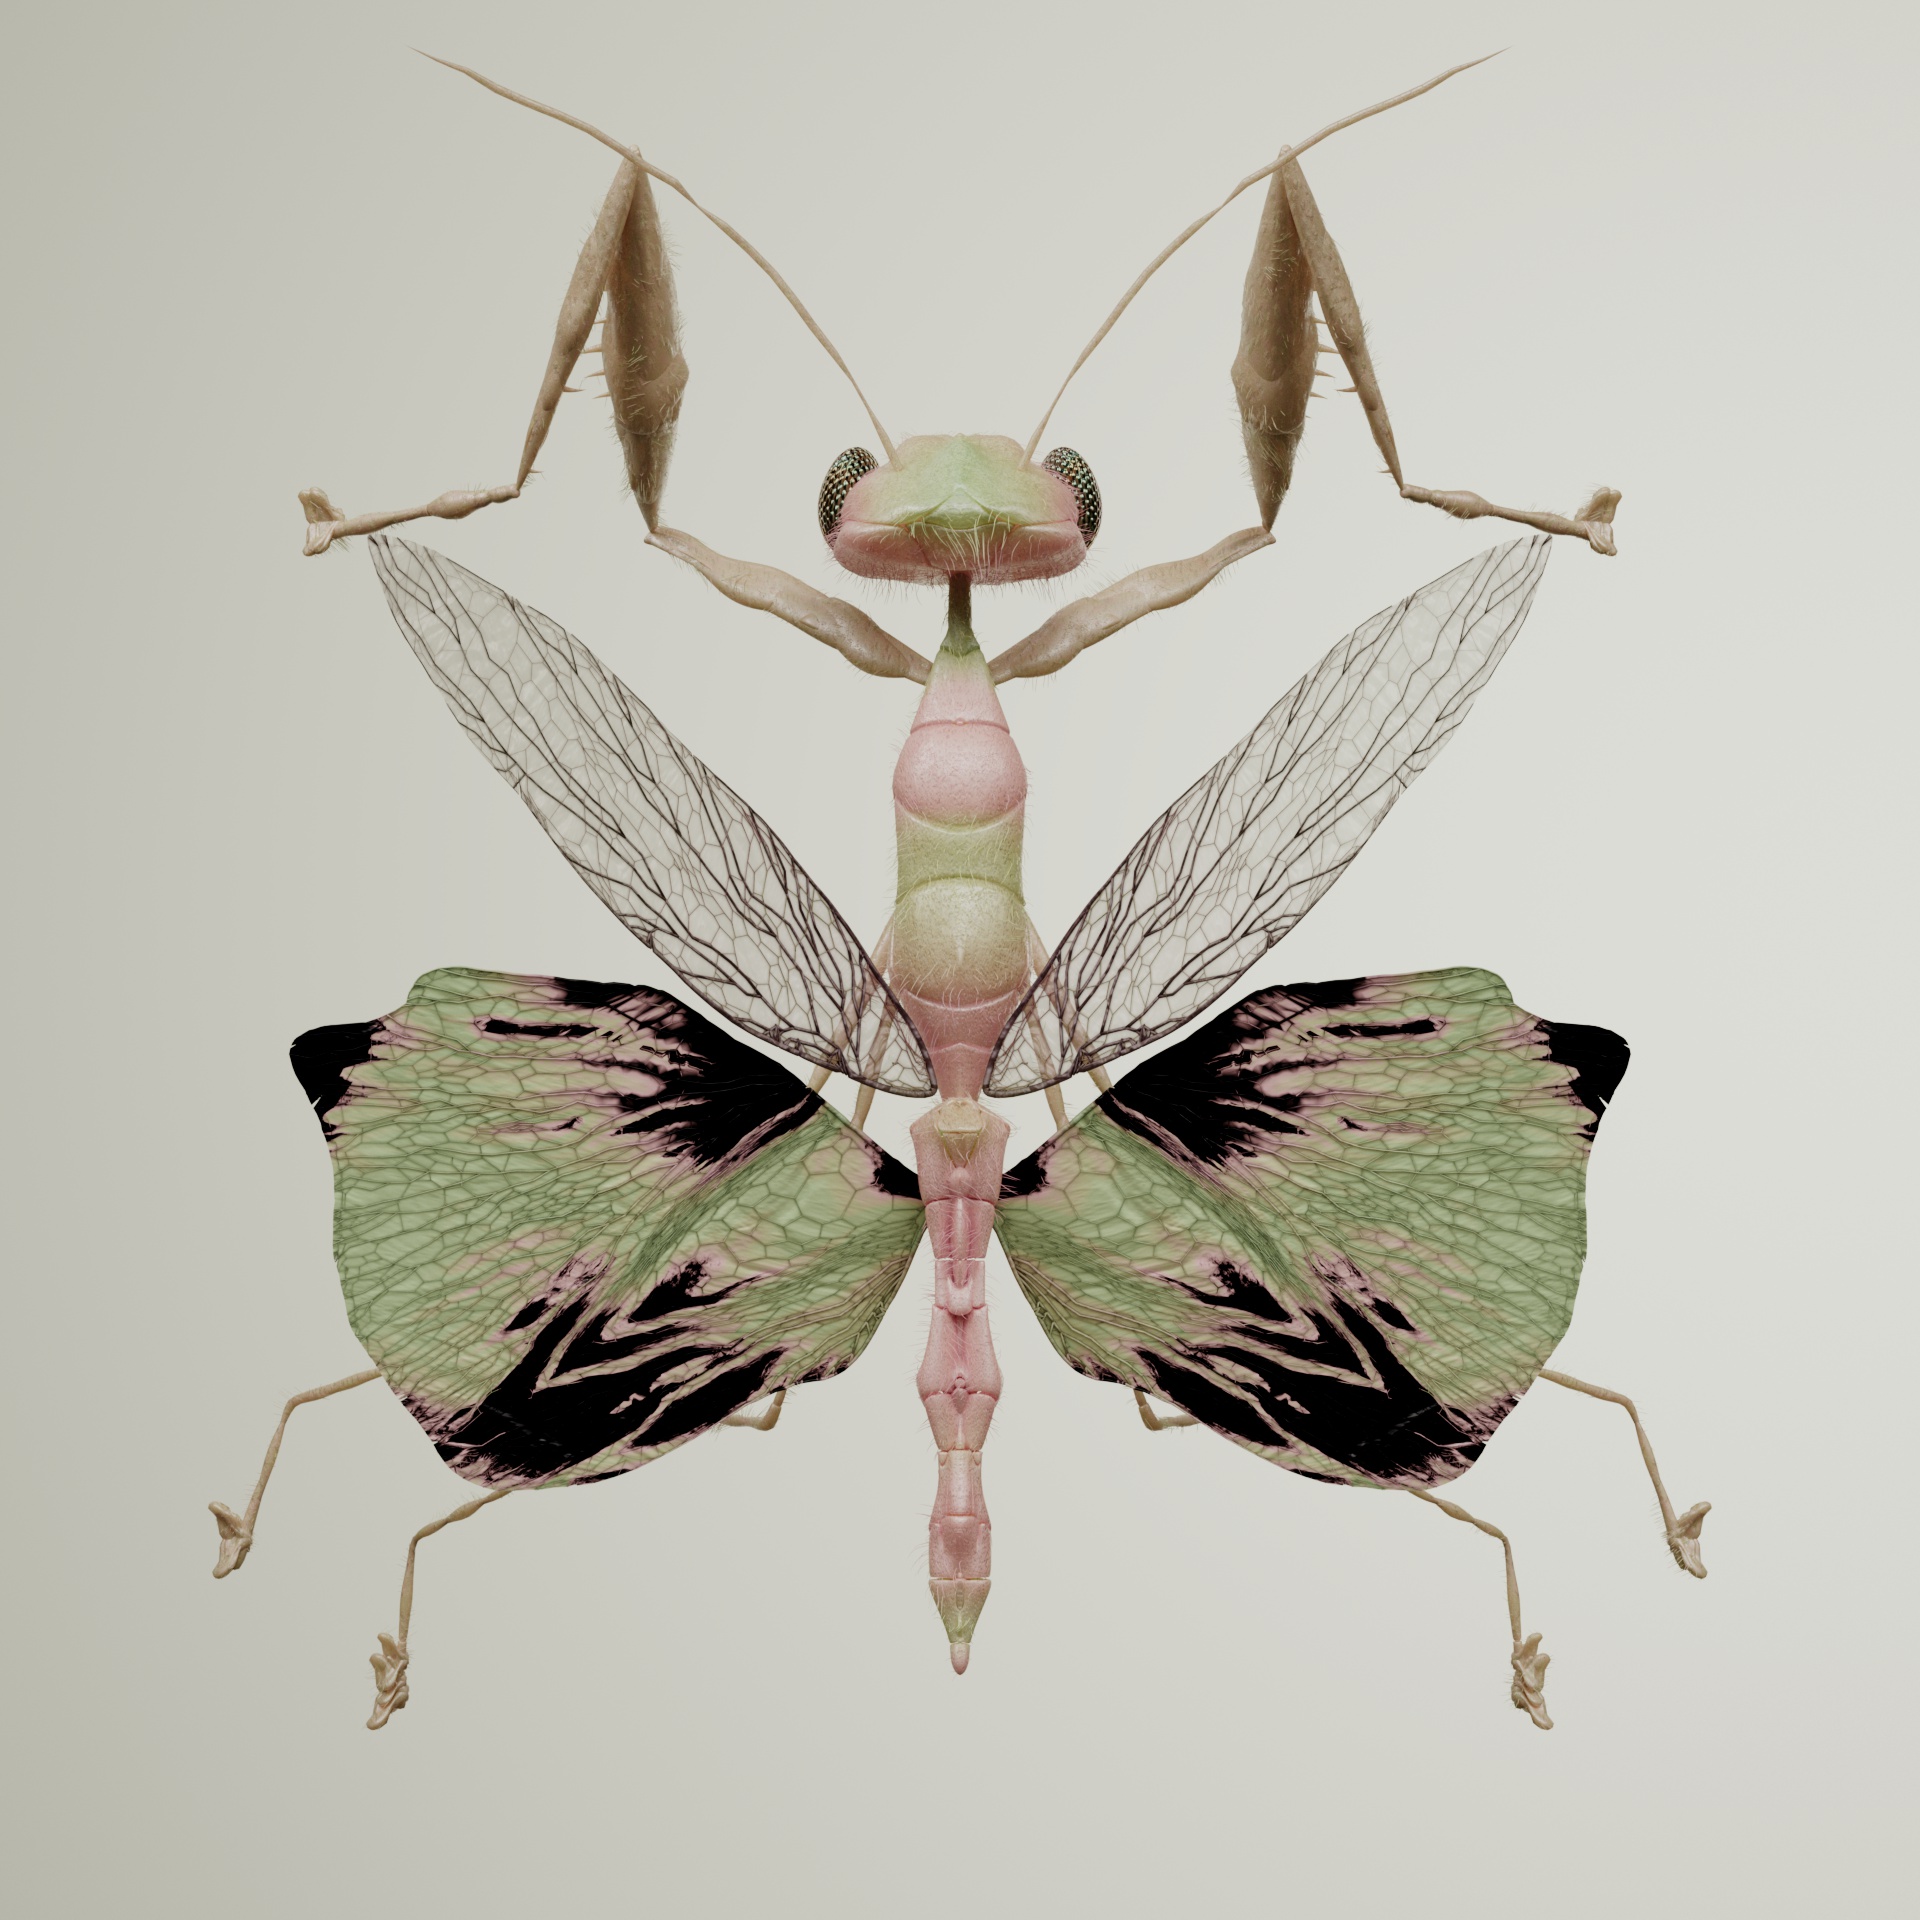 Mantodeaicetus albivo